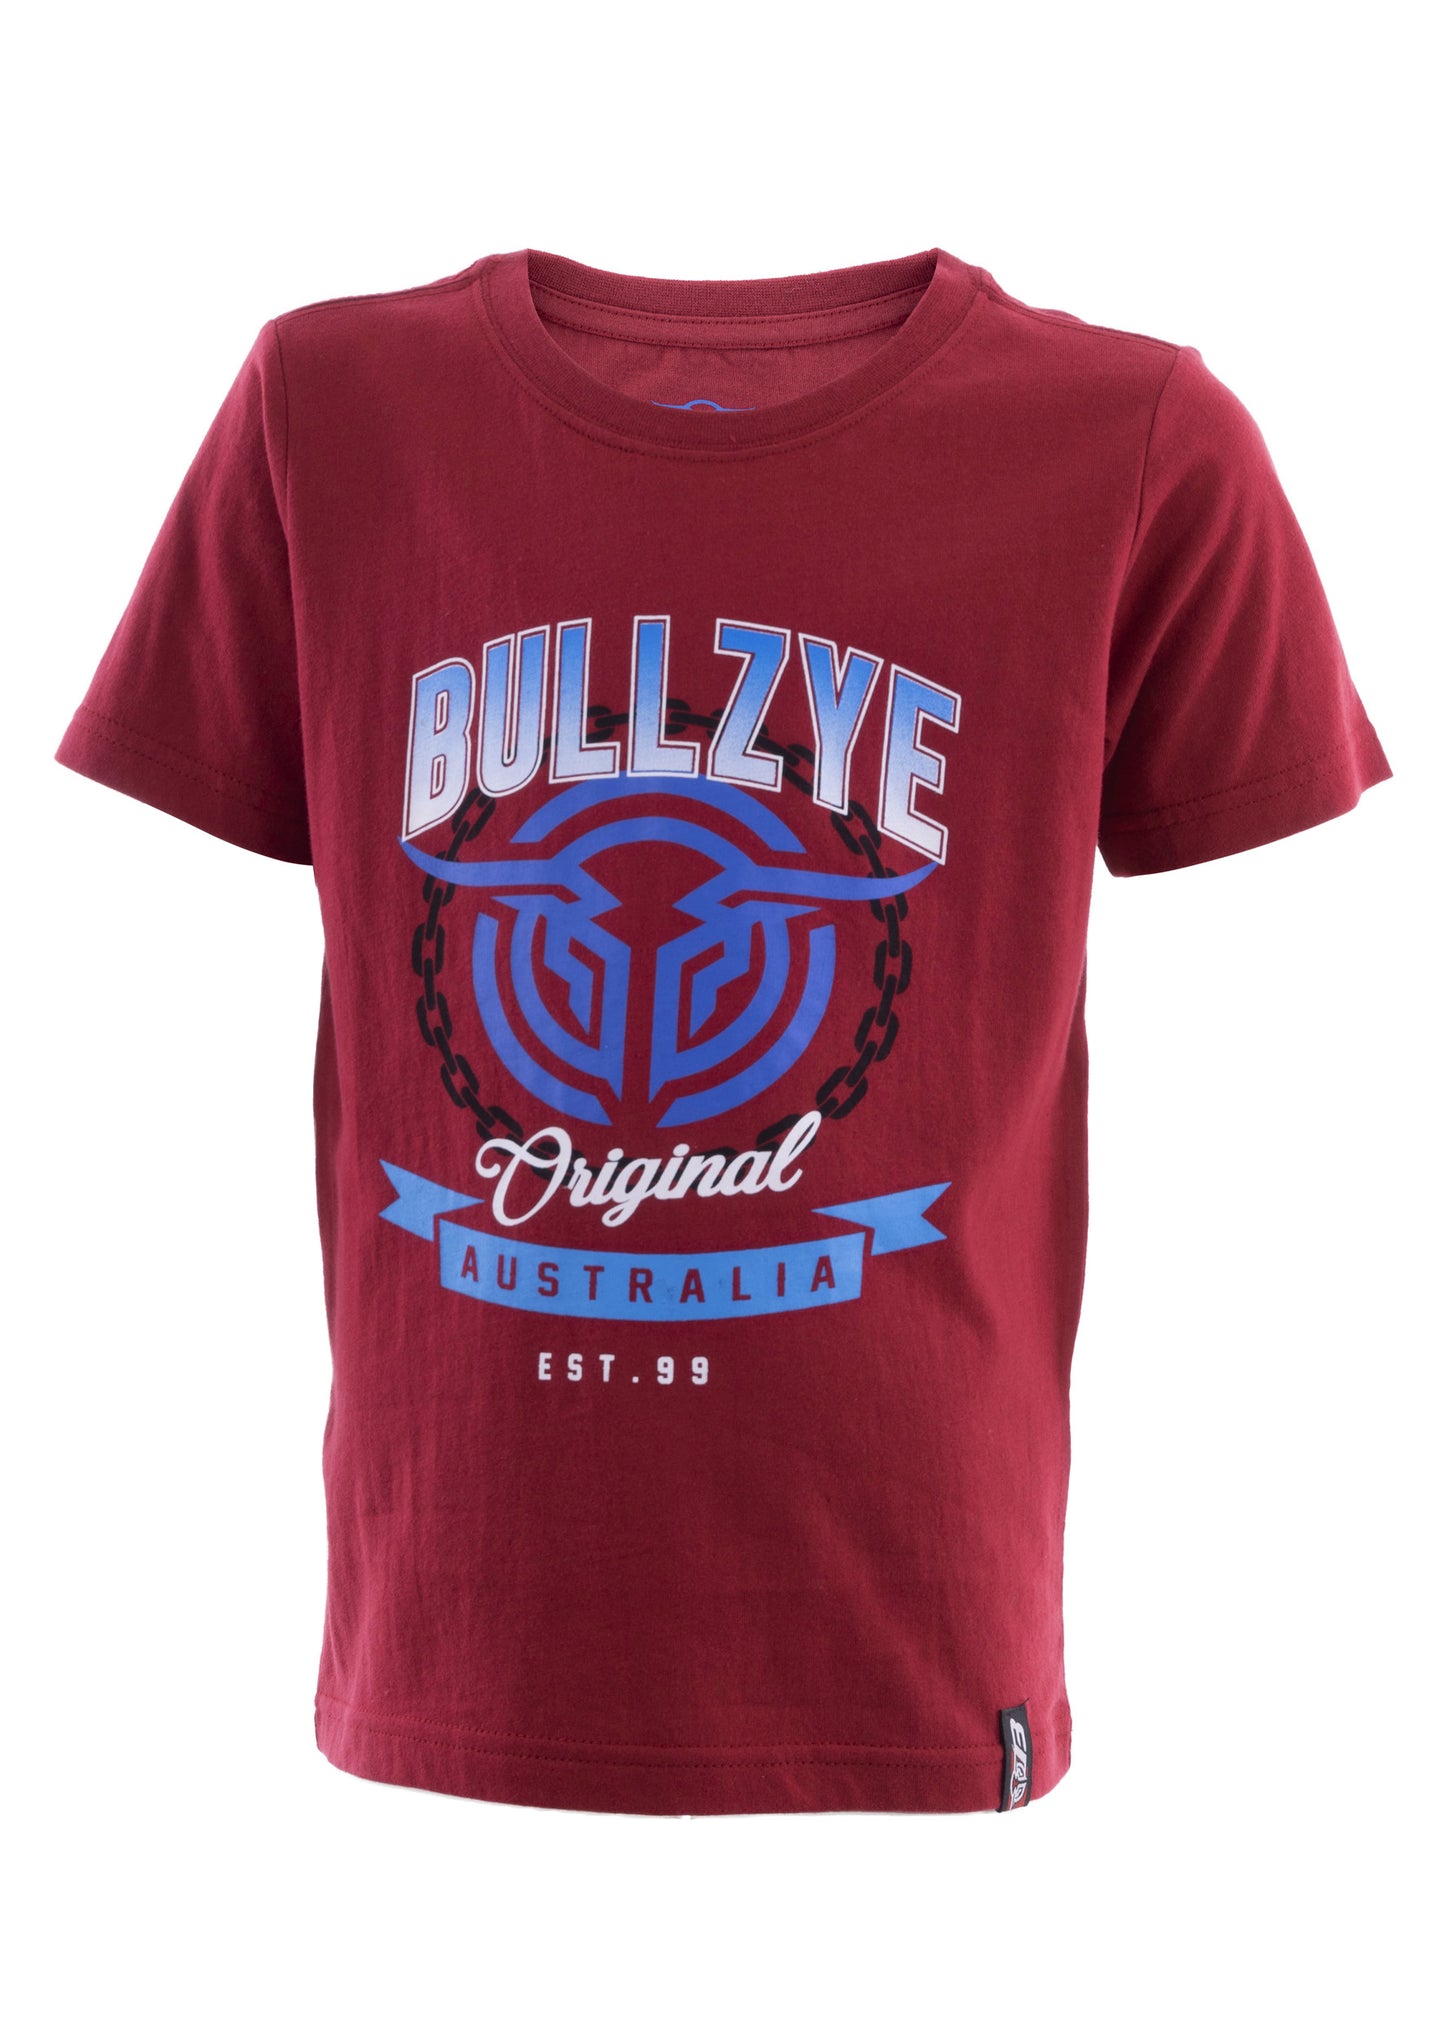 Bullzye Boys Chain Short Sleeve Tee - B2S3503184